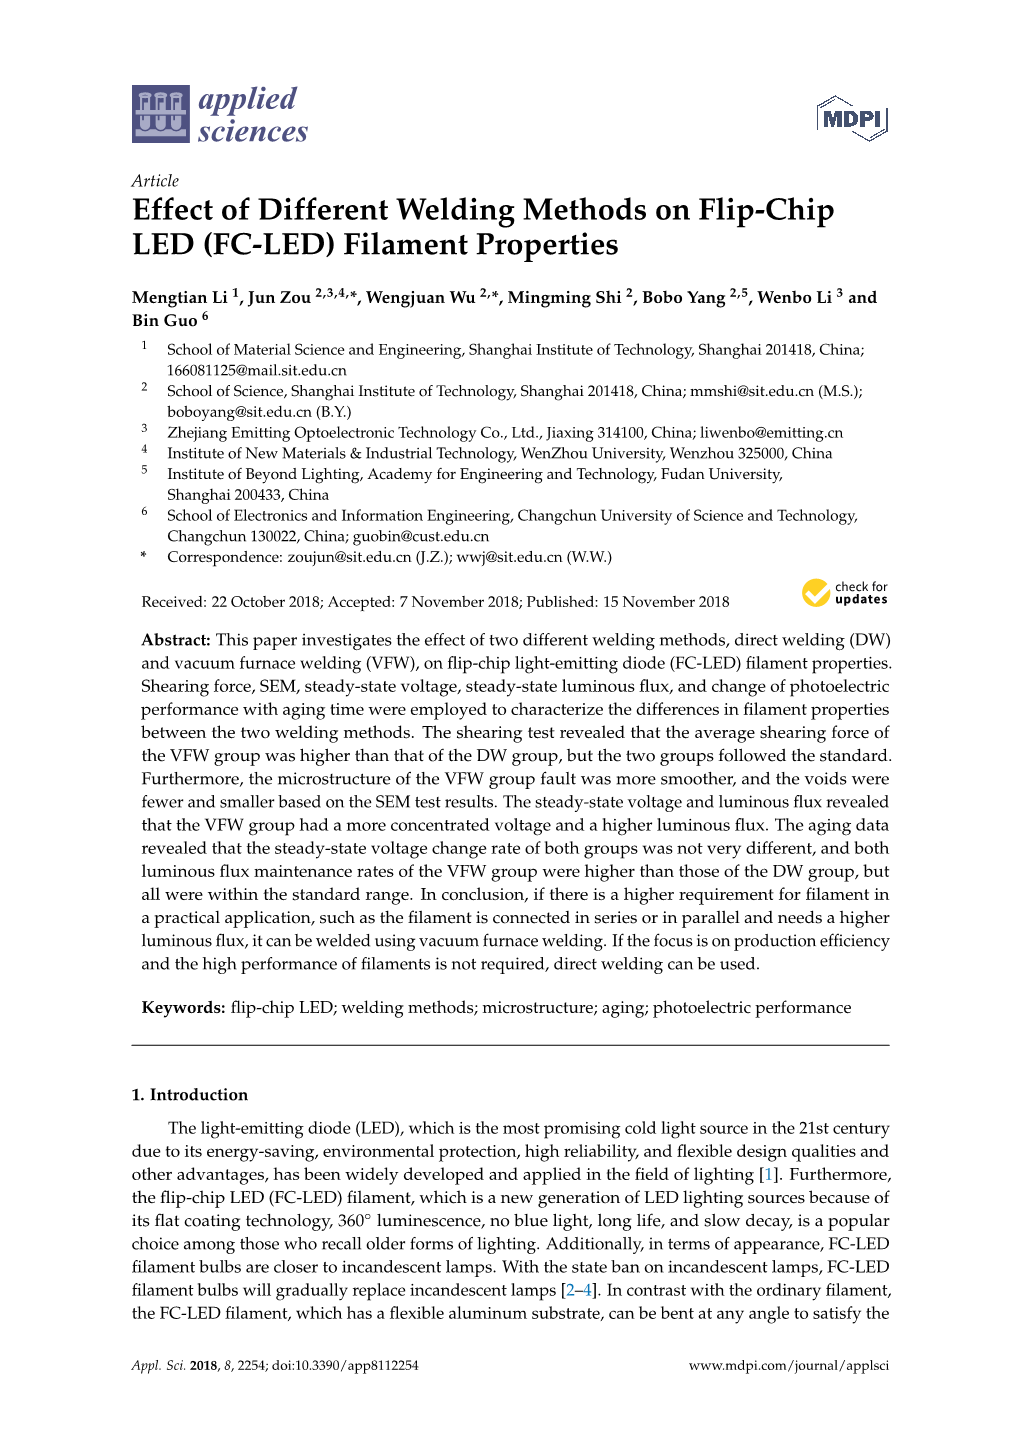 Effect of Different Welding Methods on Flip-Chip LED (FC-LED) Filament Properties